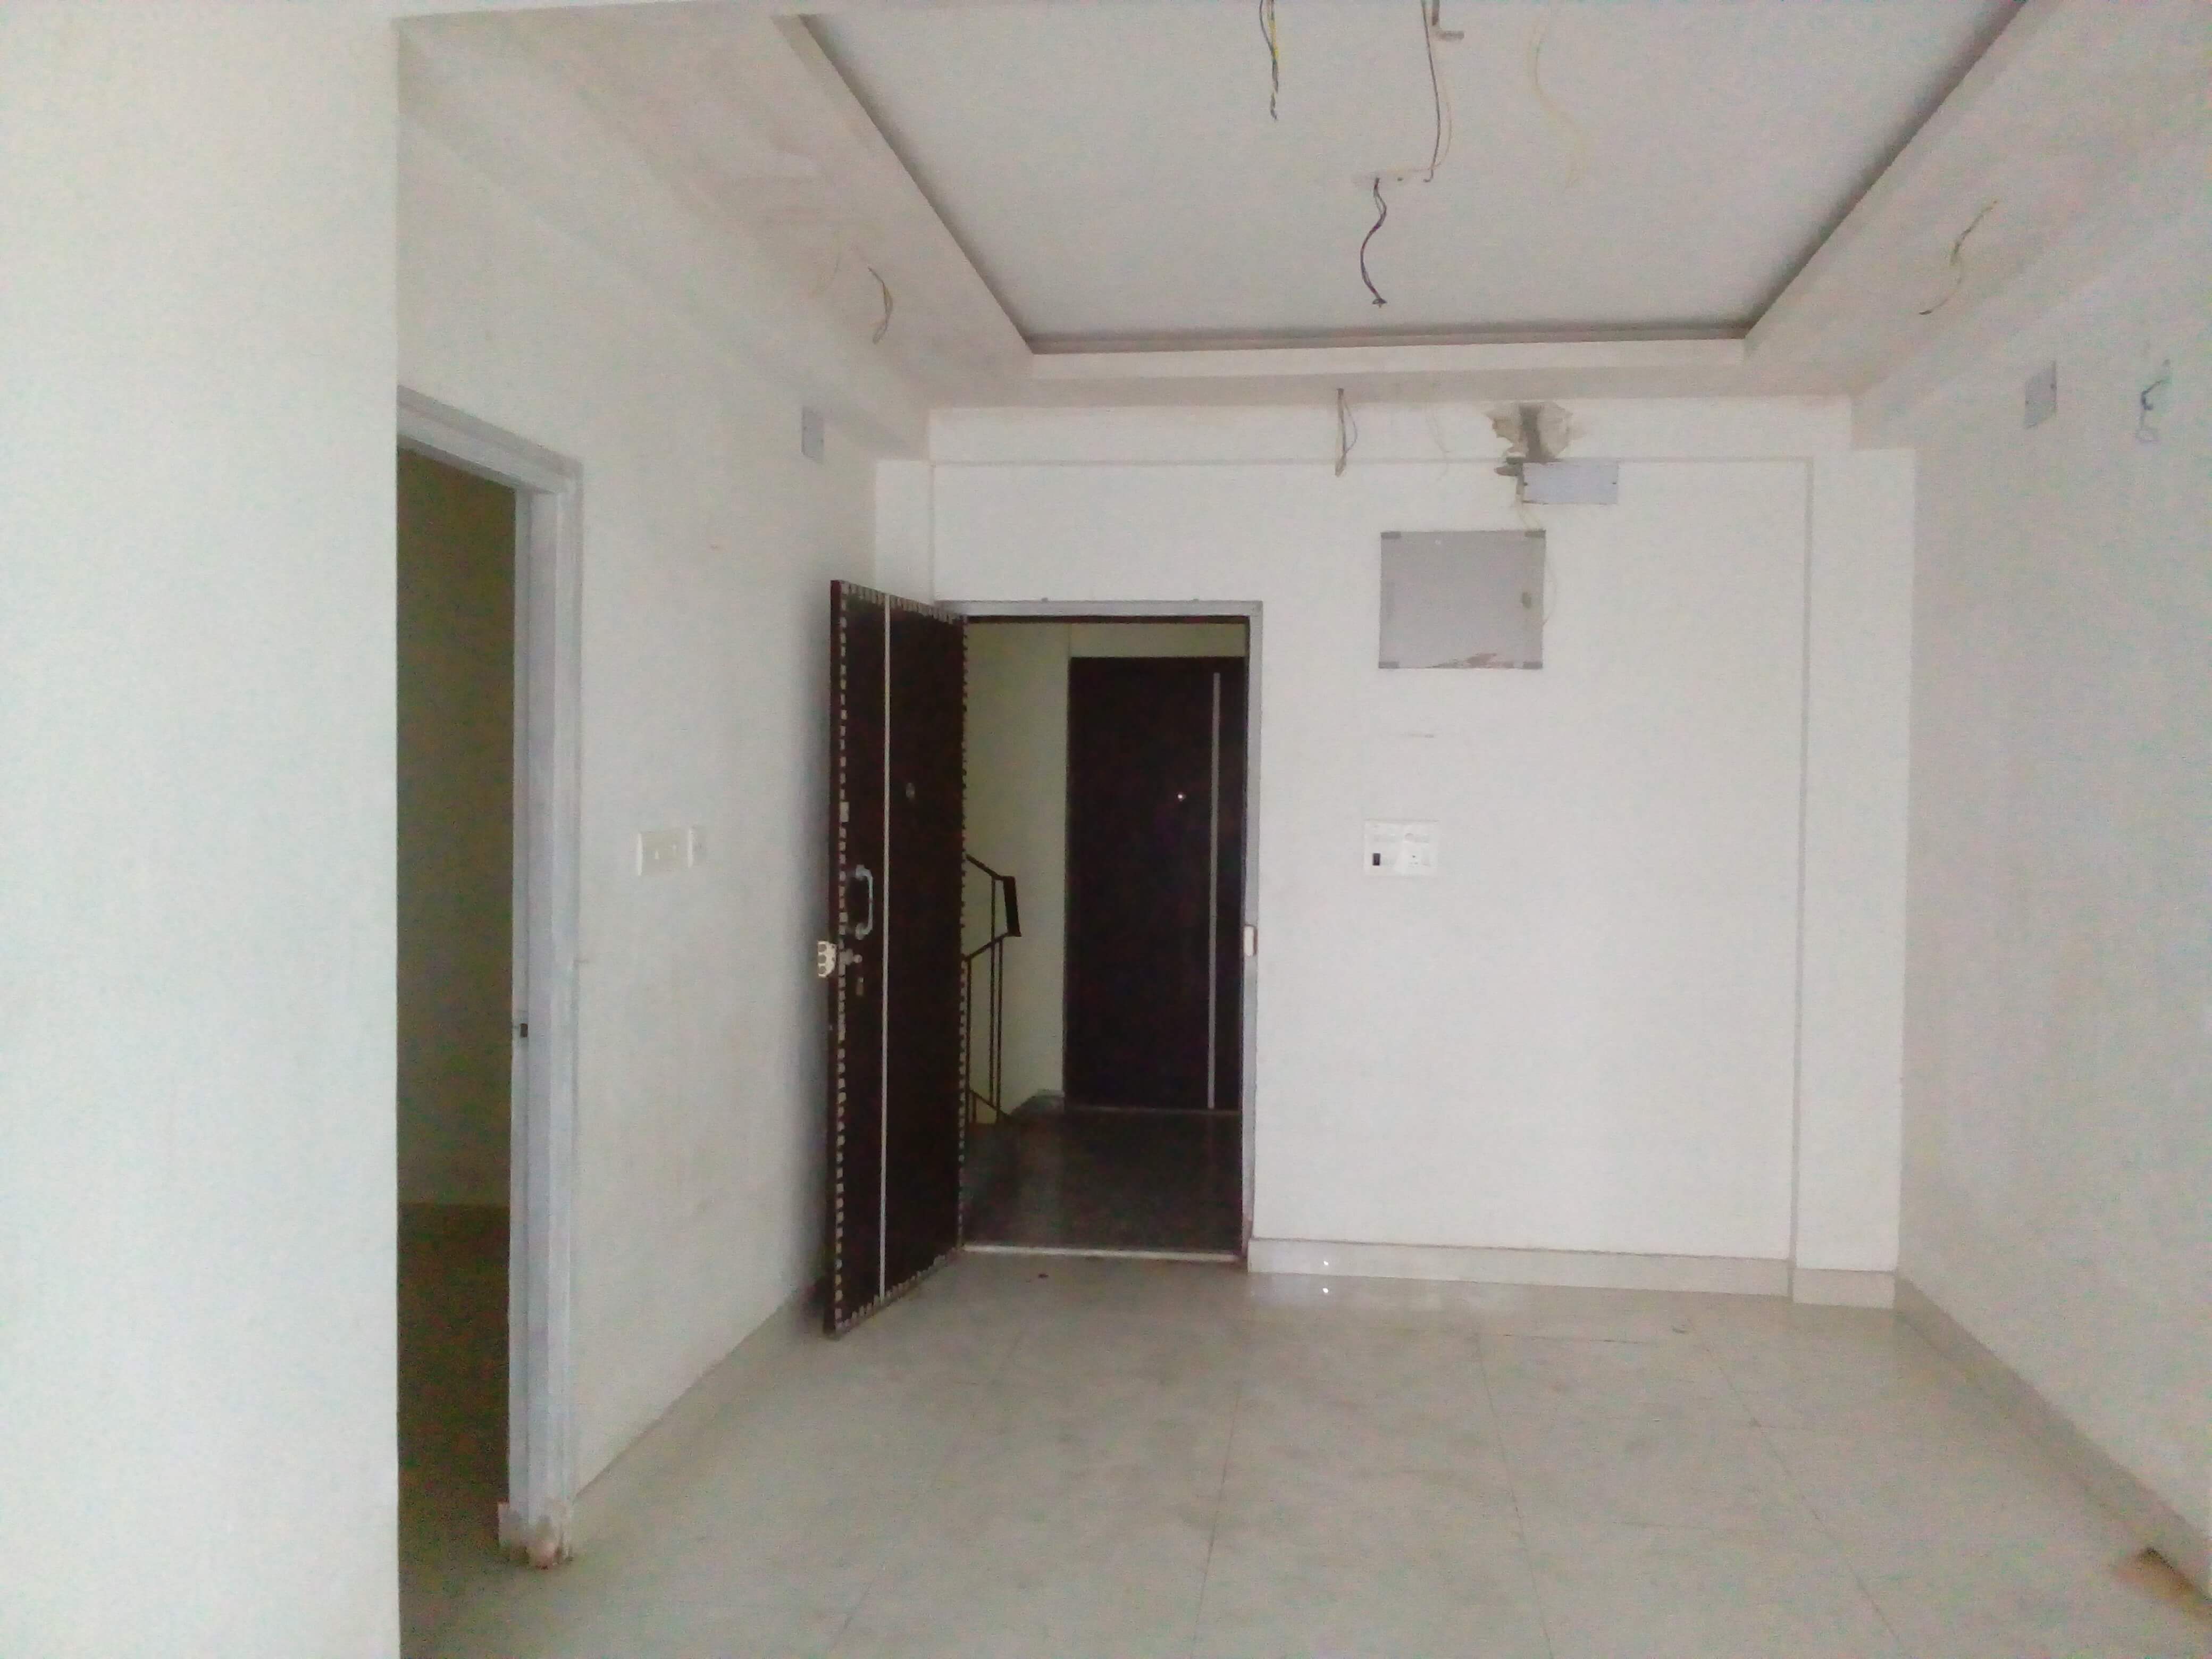 Flat For Sale in Mukundapur Kolkata (Id: 20545)